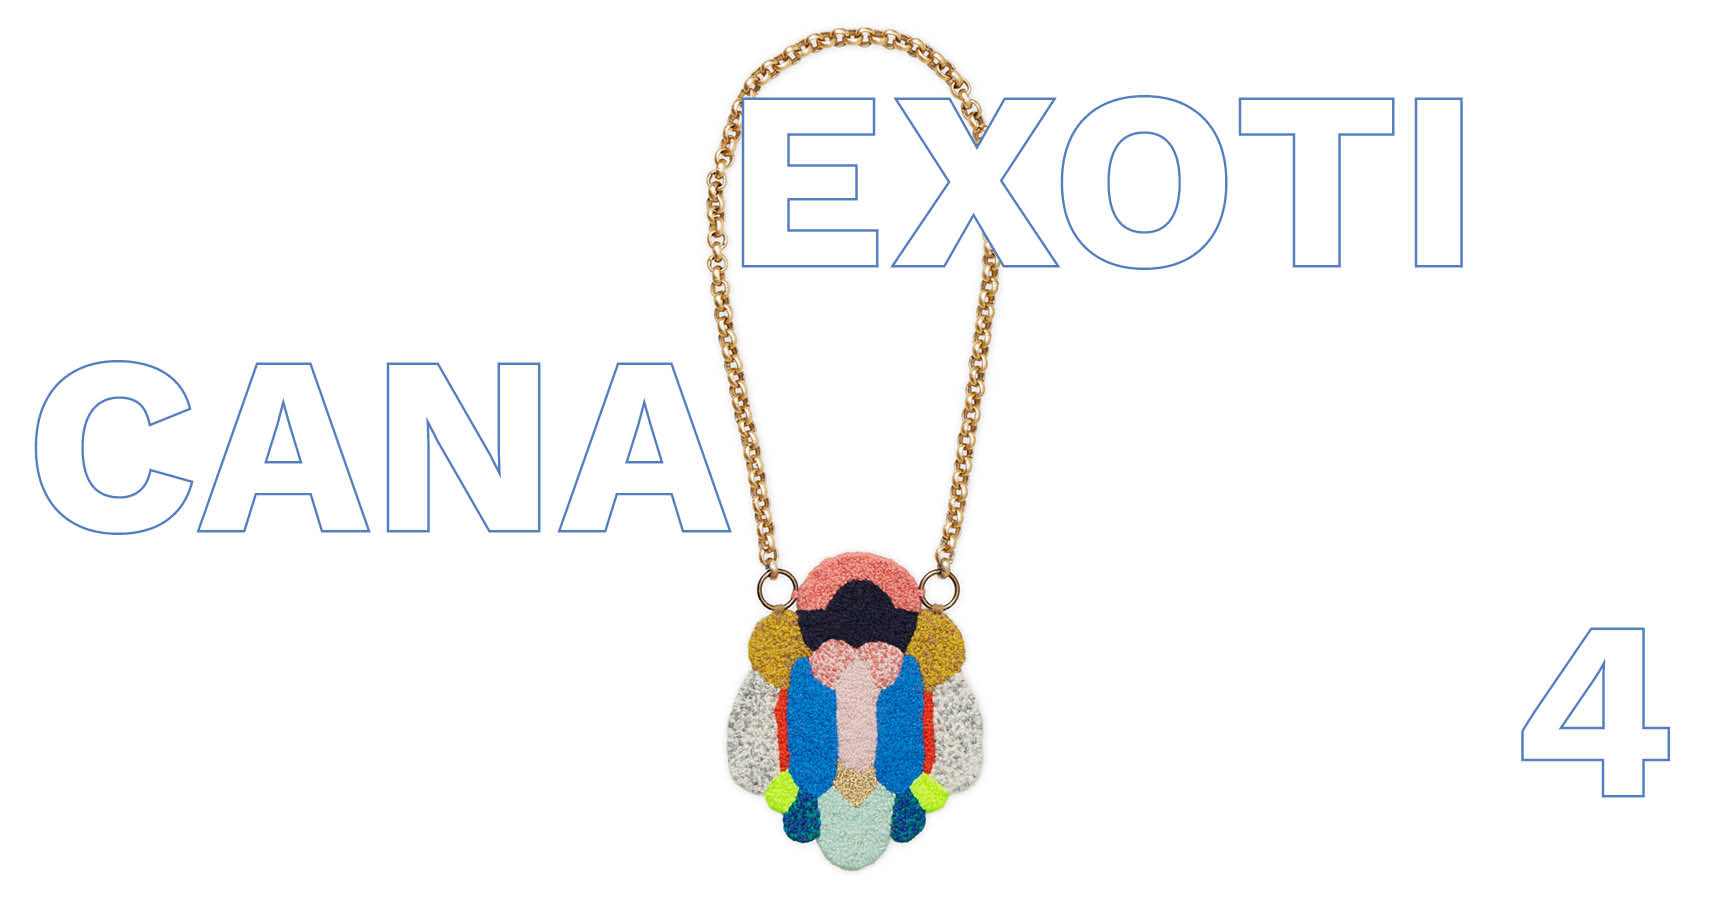 The jewellery piece Exoticana 4